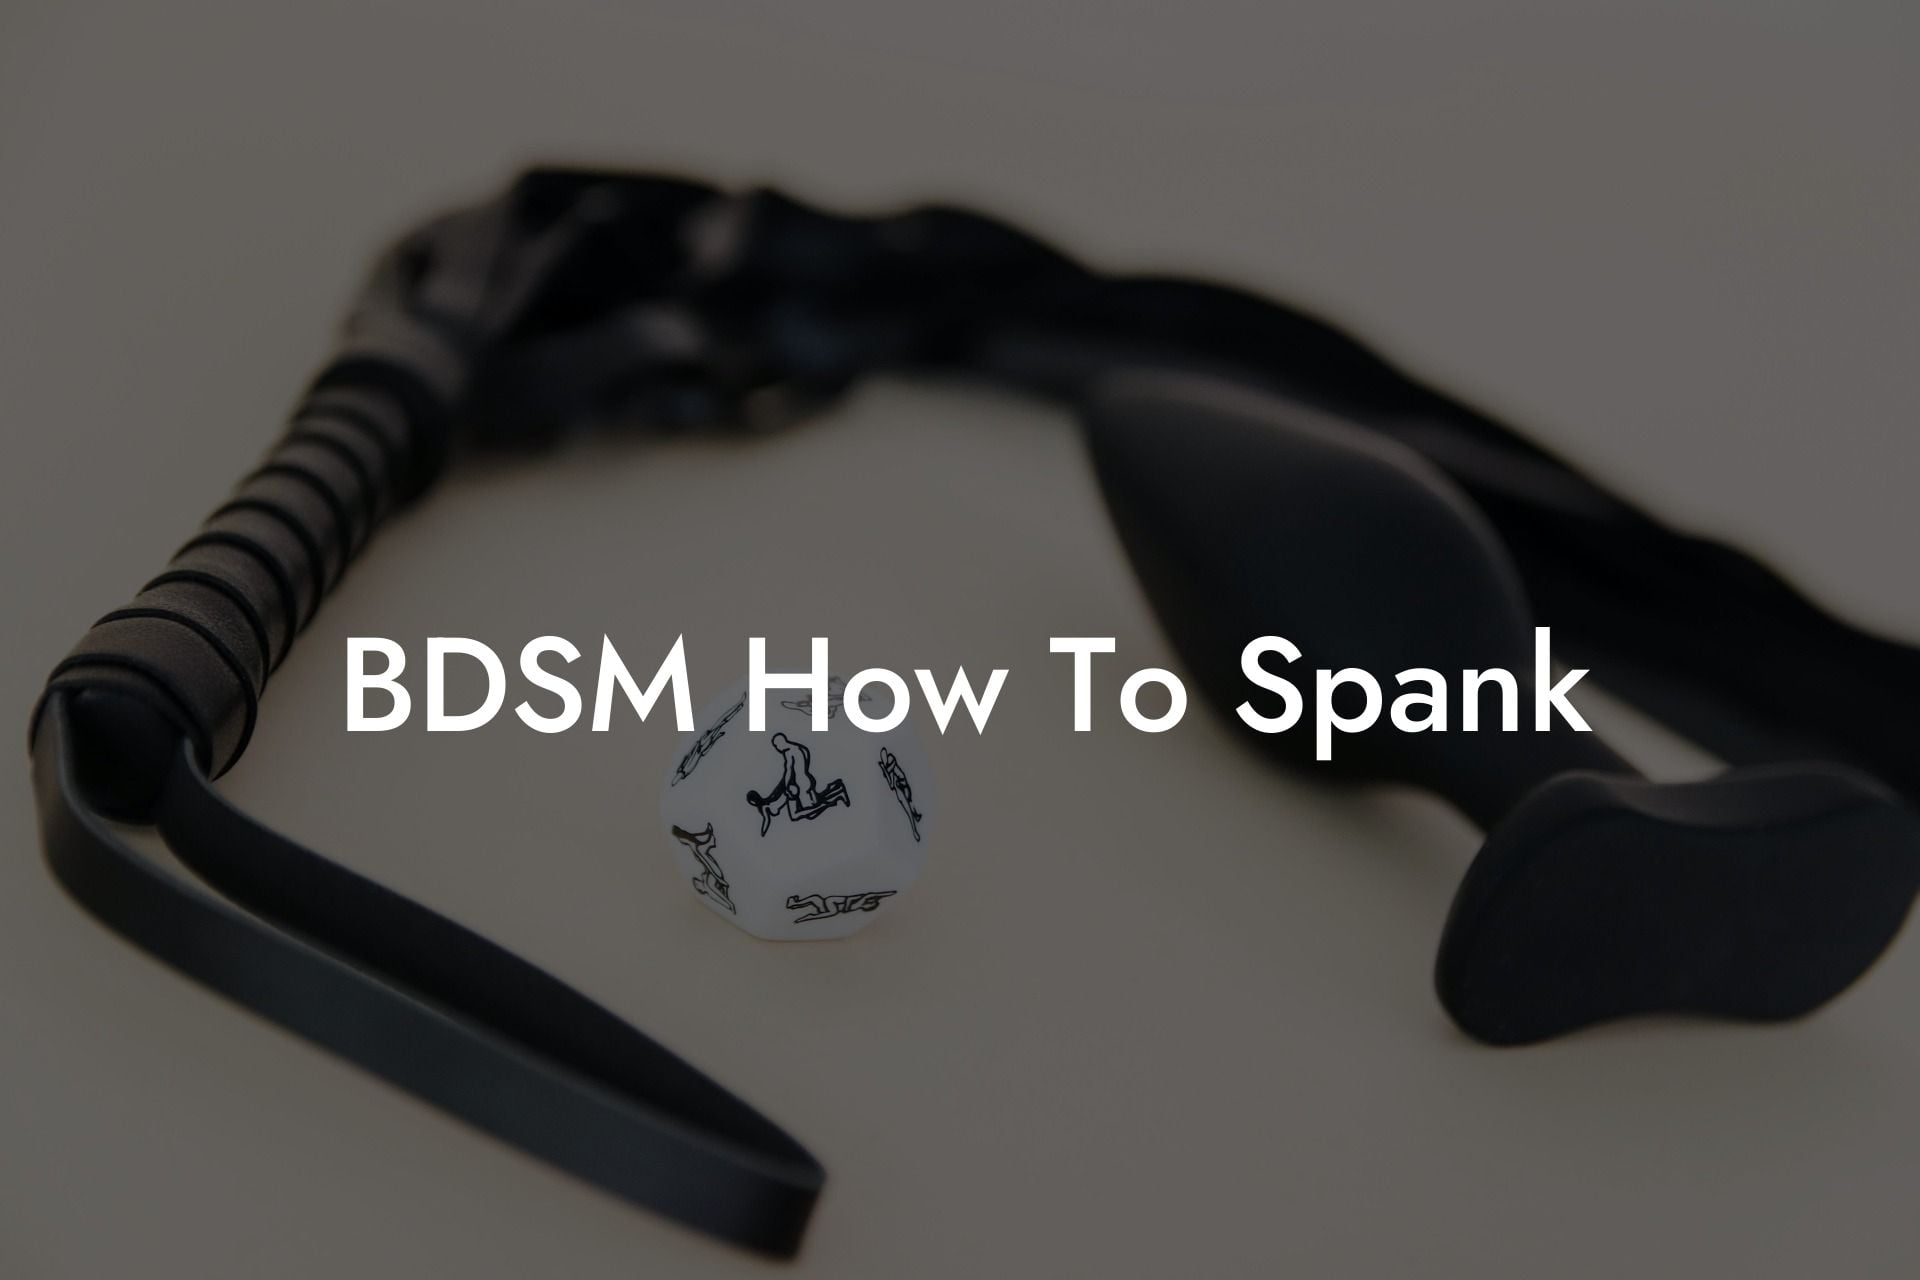 BDSM How To Spank